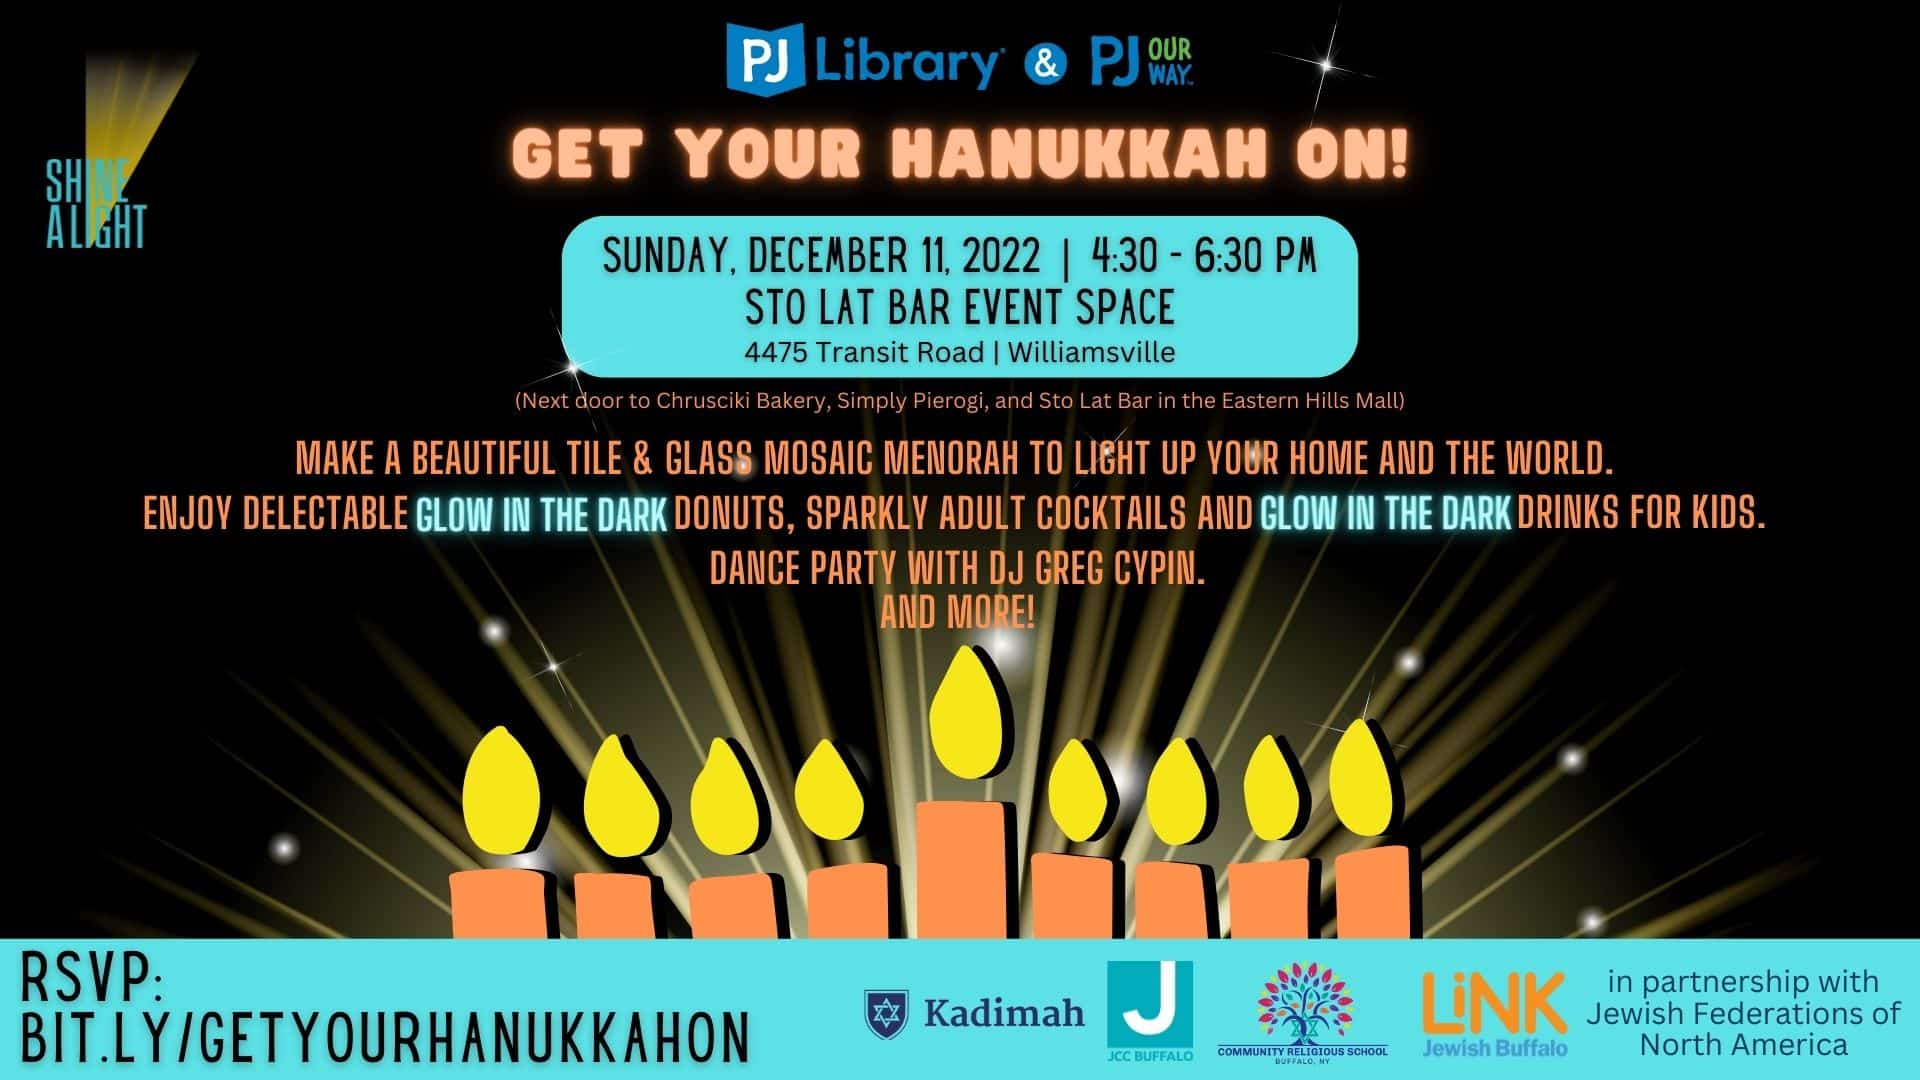 Get Your Hanukkah On - PJ Hanukkah 2022 event cover